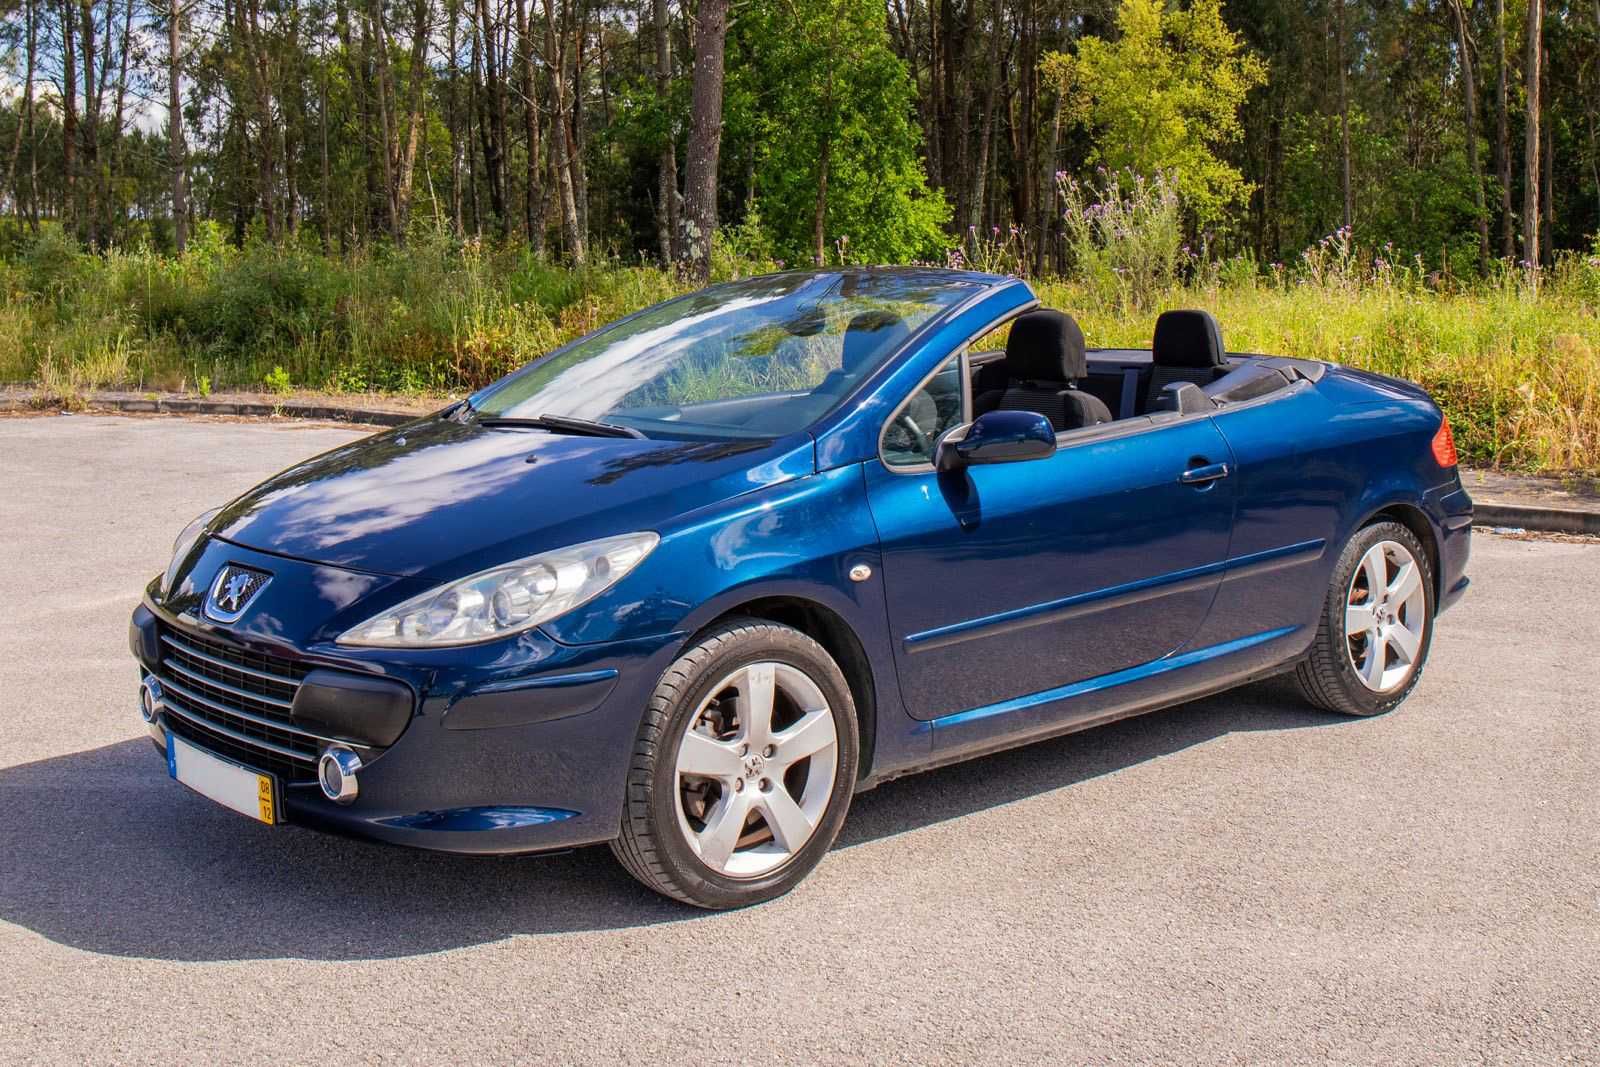 Peugeot 307 CC 2.0 HDi - Fiável e Bem Equipado!